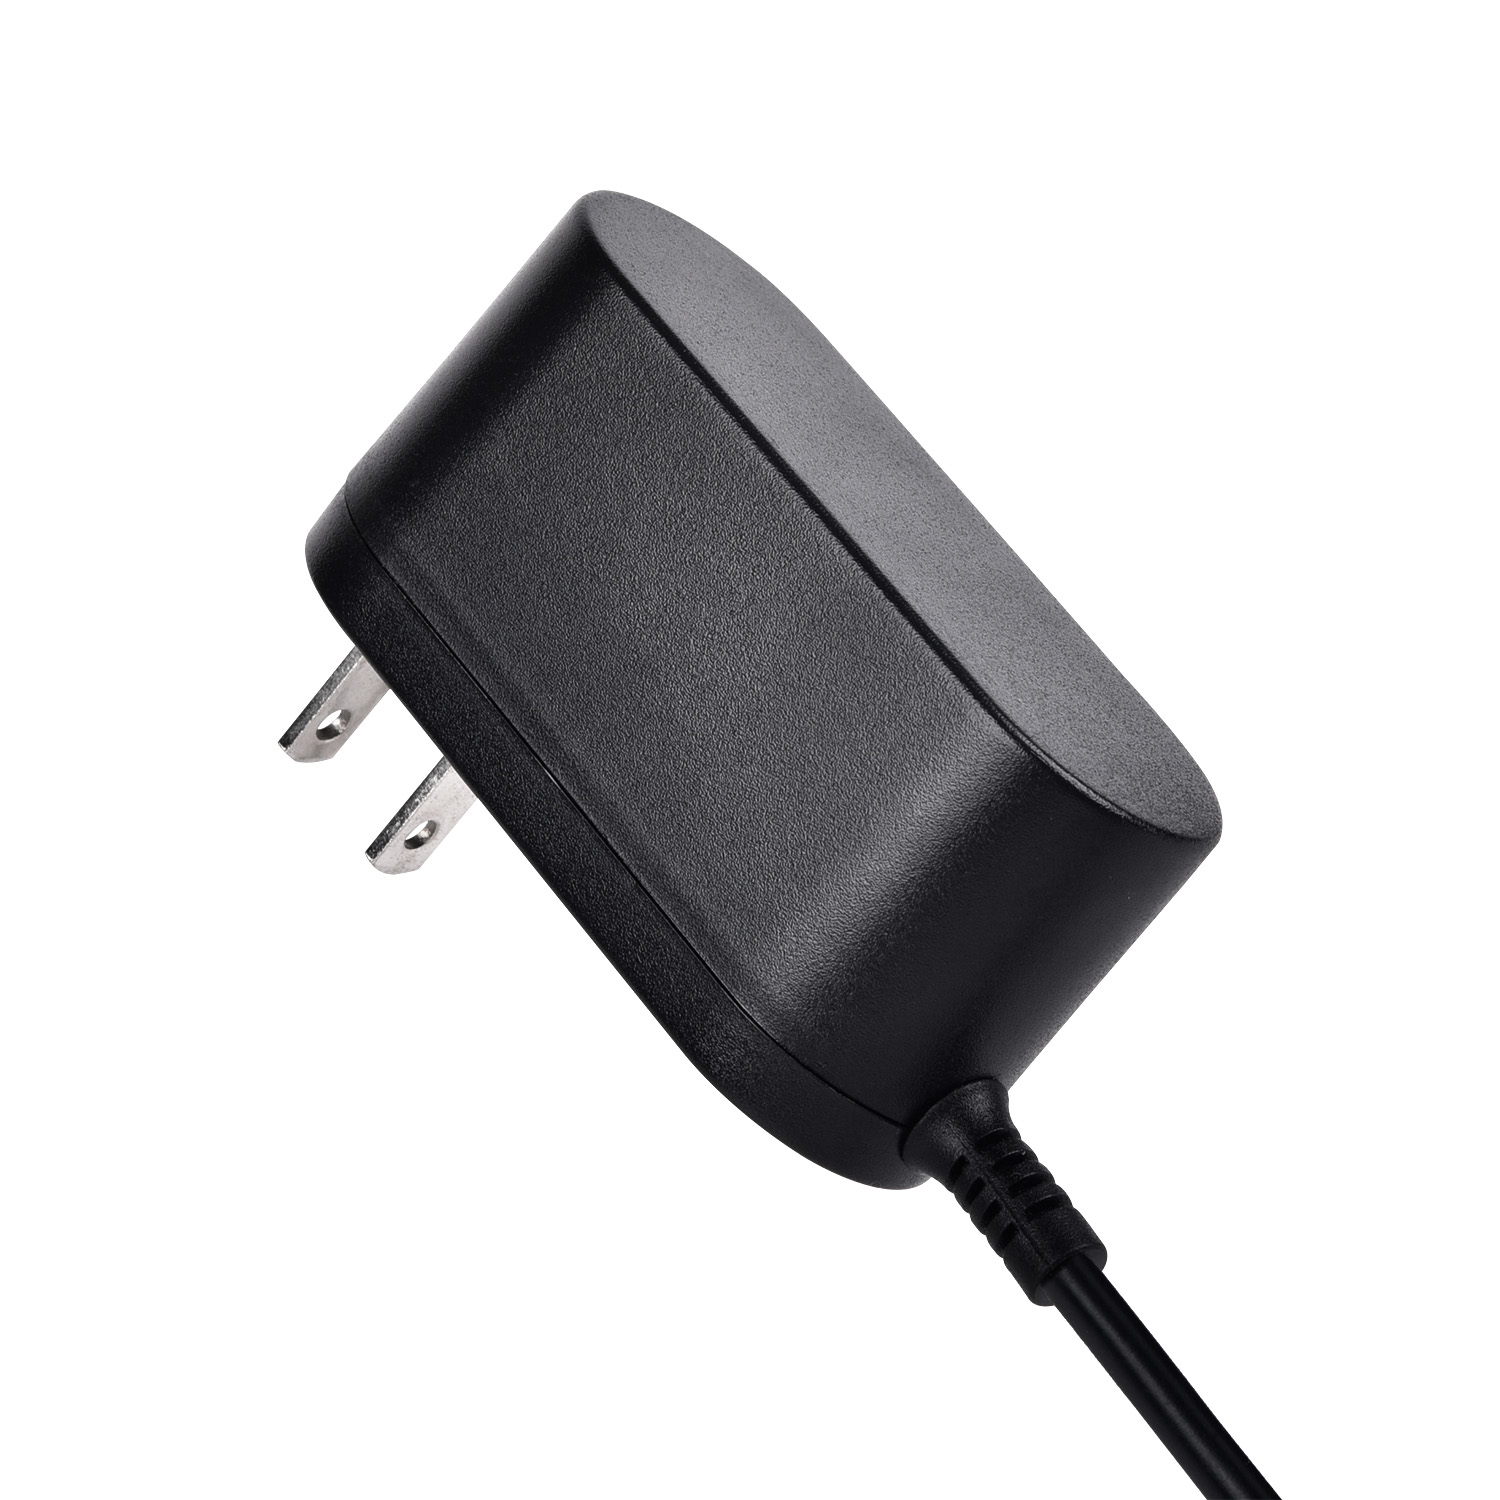 eu plug travel charger 5v 0.5a 1a 2a 2.4a USB wall modelwith CE RoHS TUV ,2 years warranty